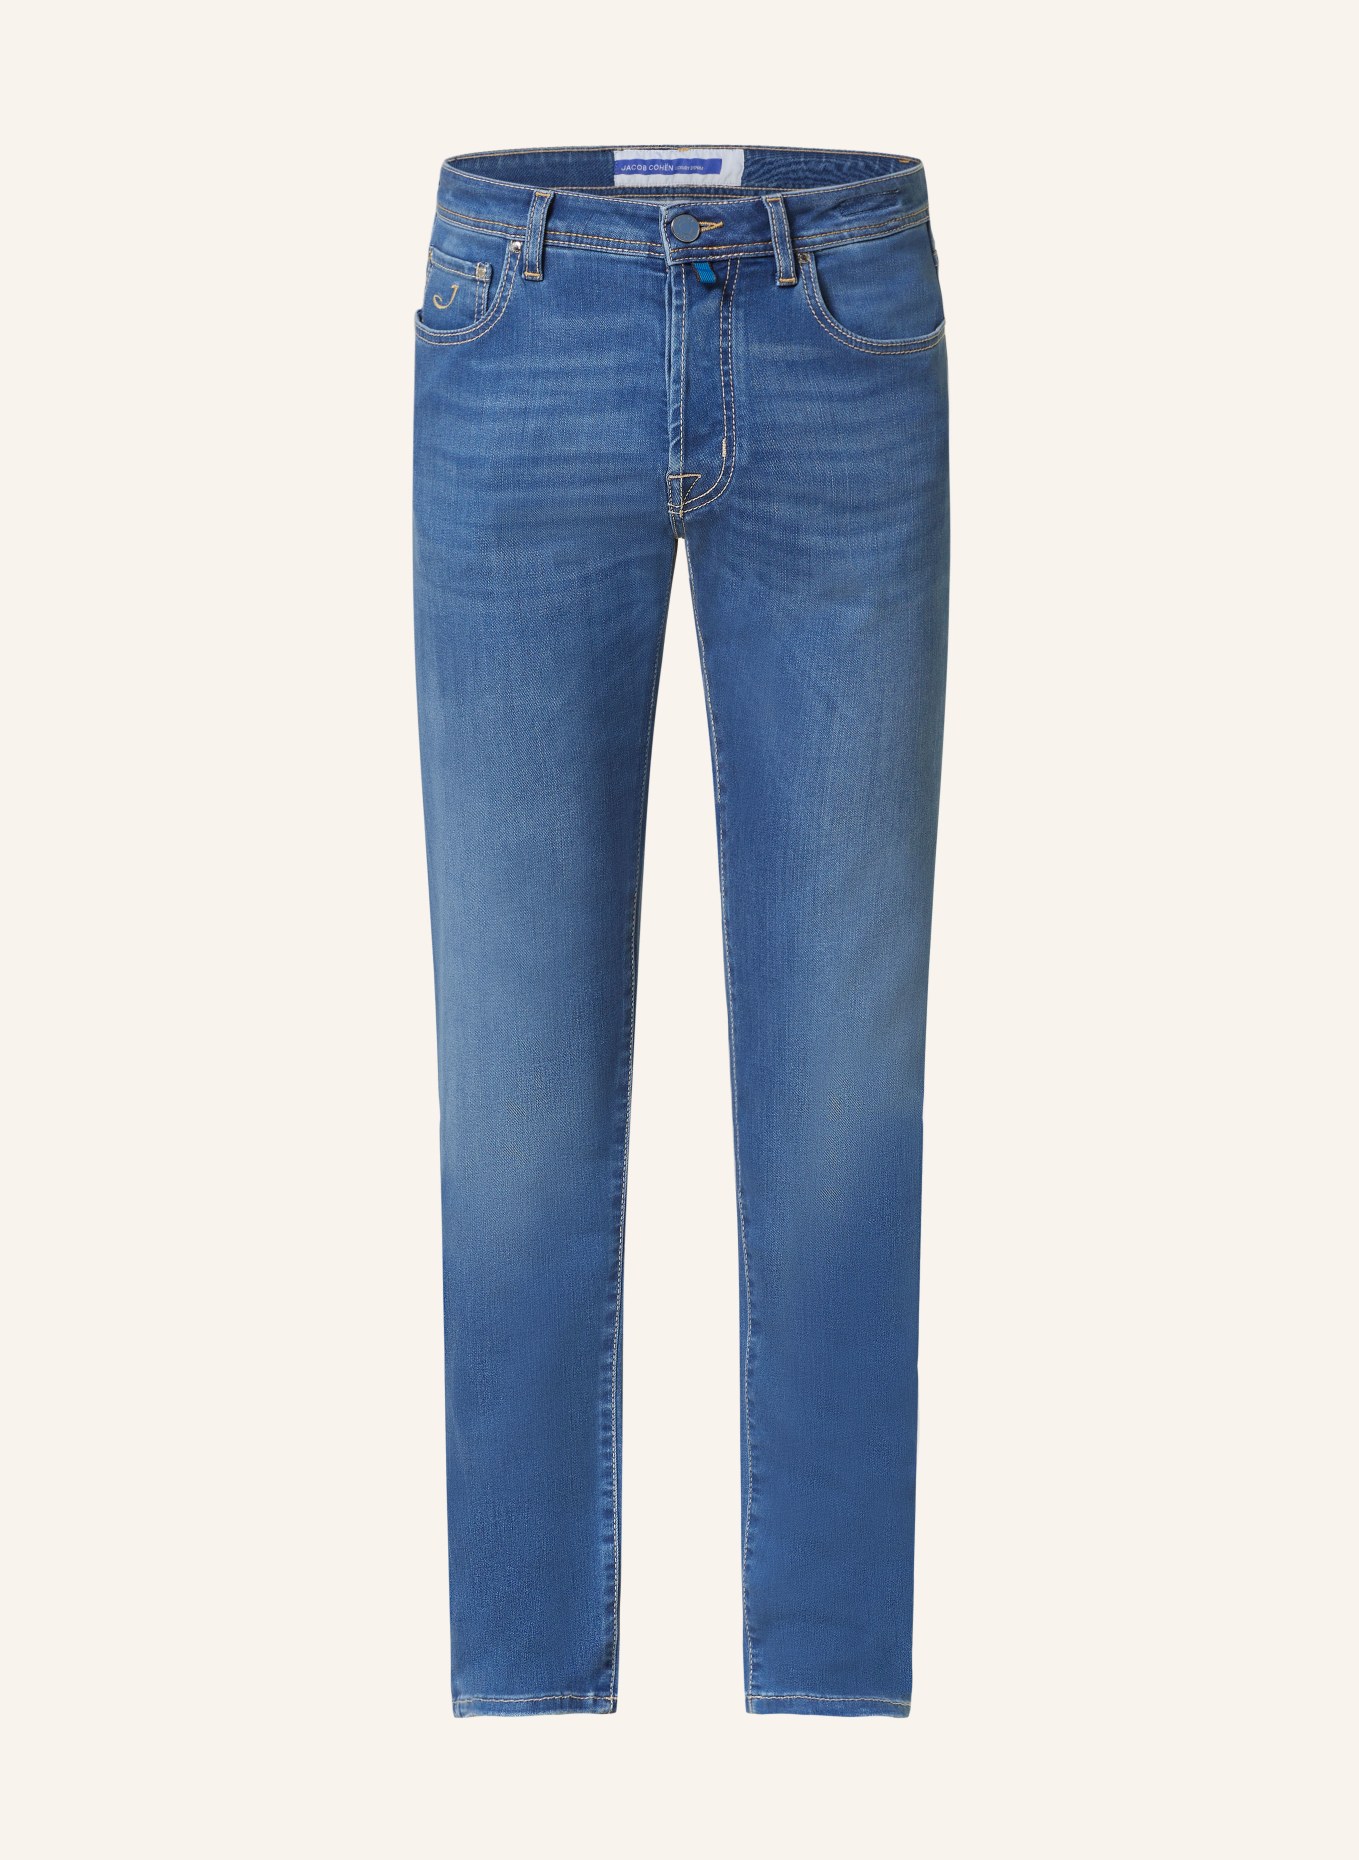 JACOB COHEN Jeans BARD Slim Fit, Farbe: 753D Light Blue (Bild 1)